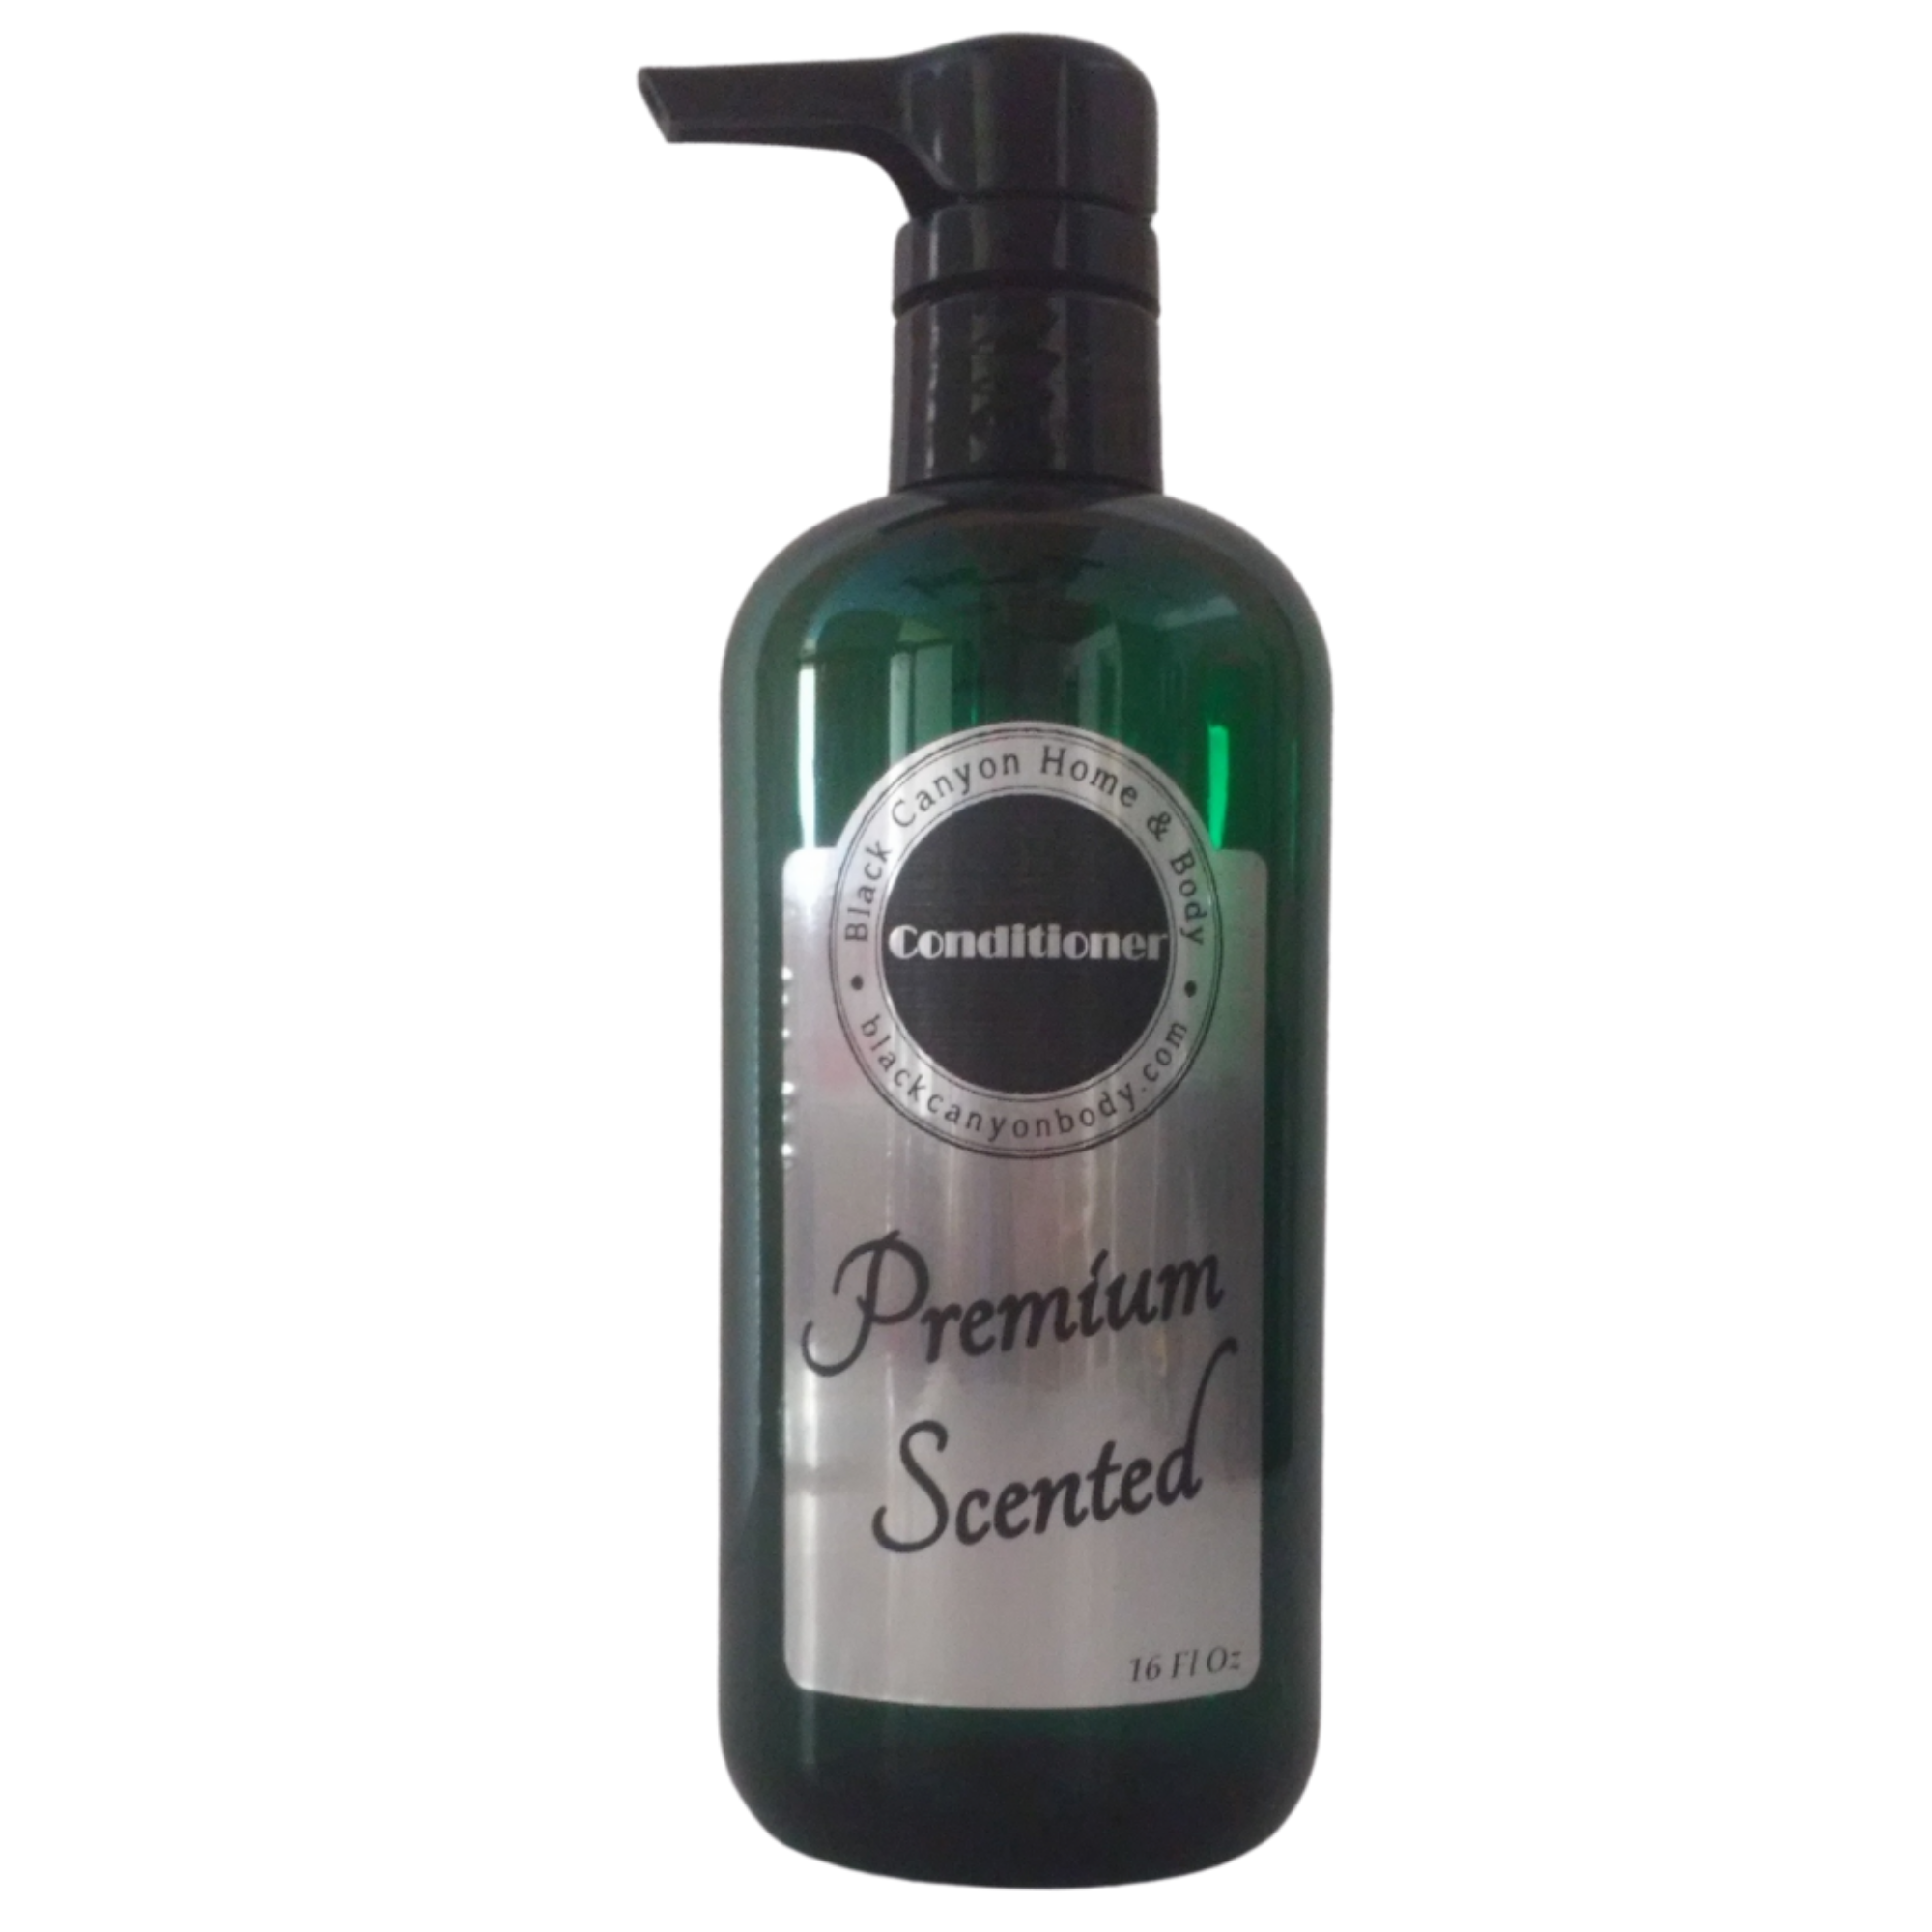 Black Canyon Bergamot Jasmine & Patchouli Scented Conditioner with Argan Oil